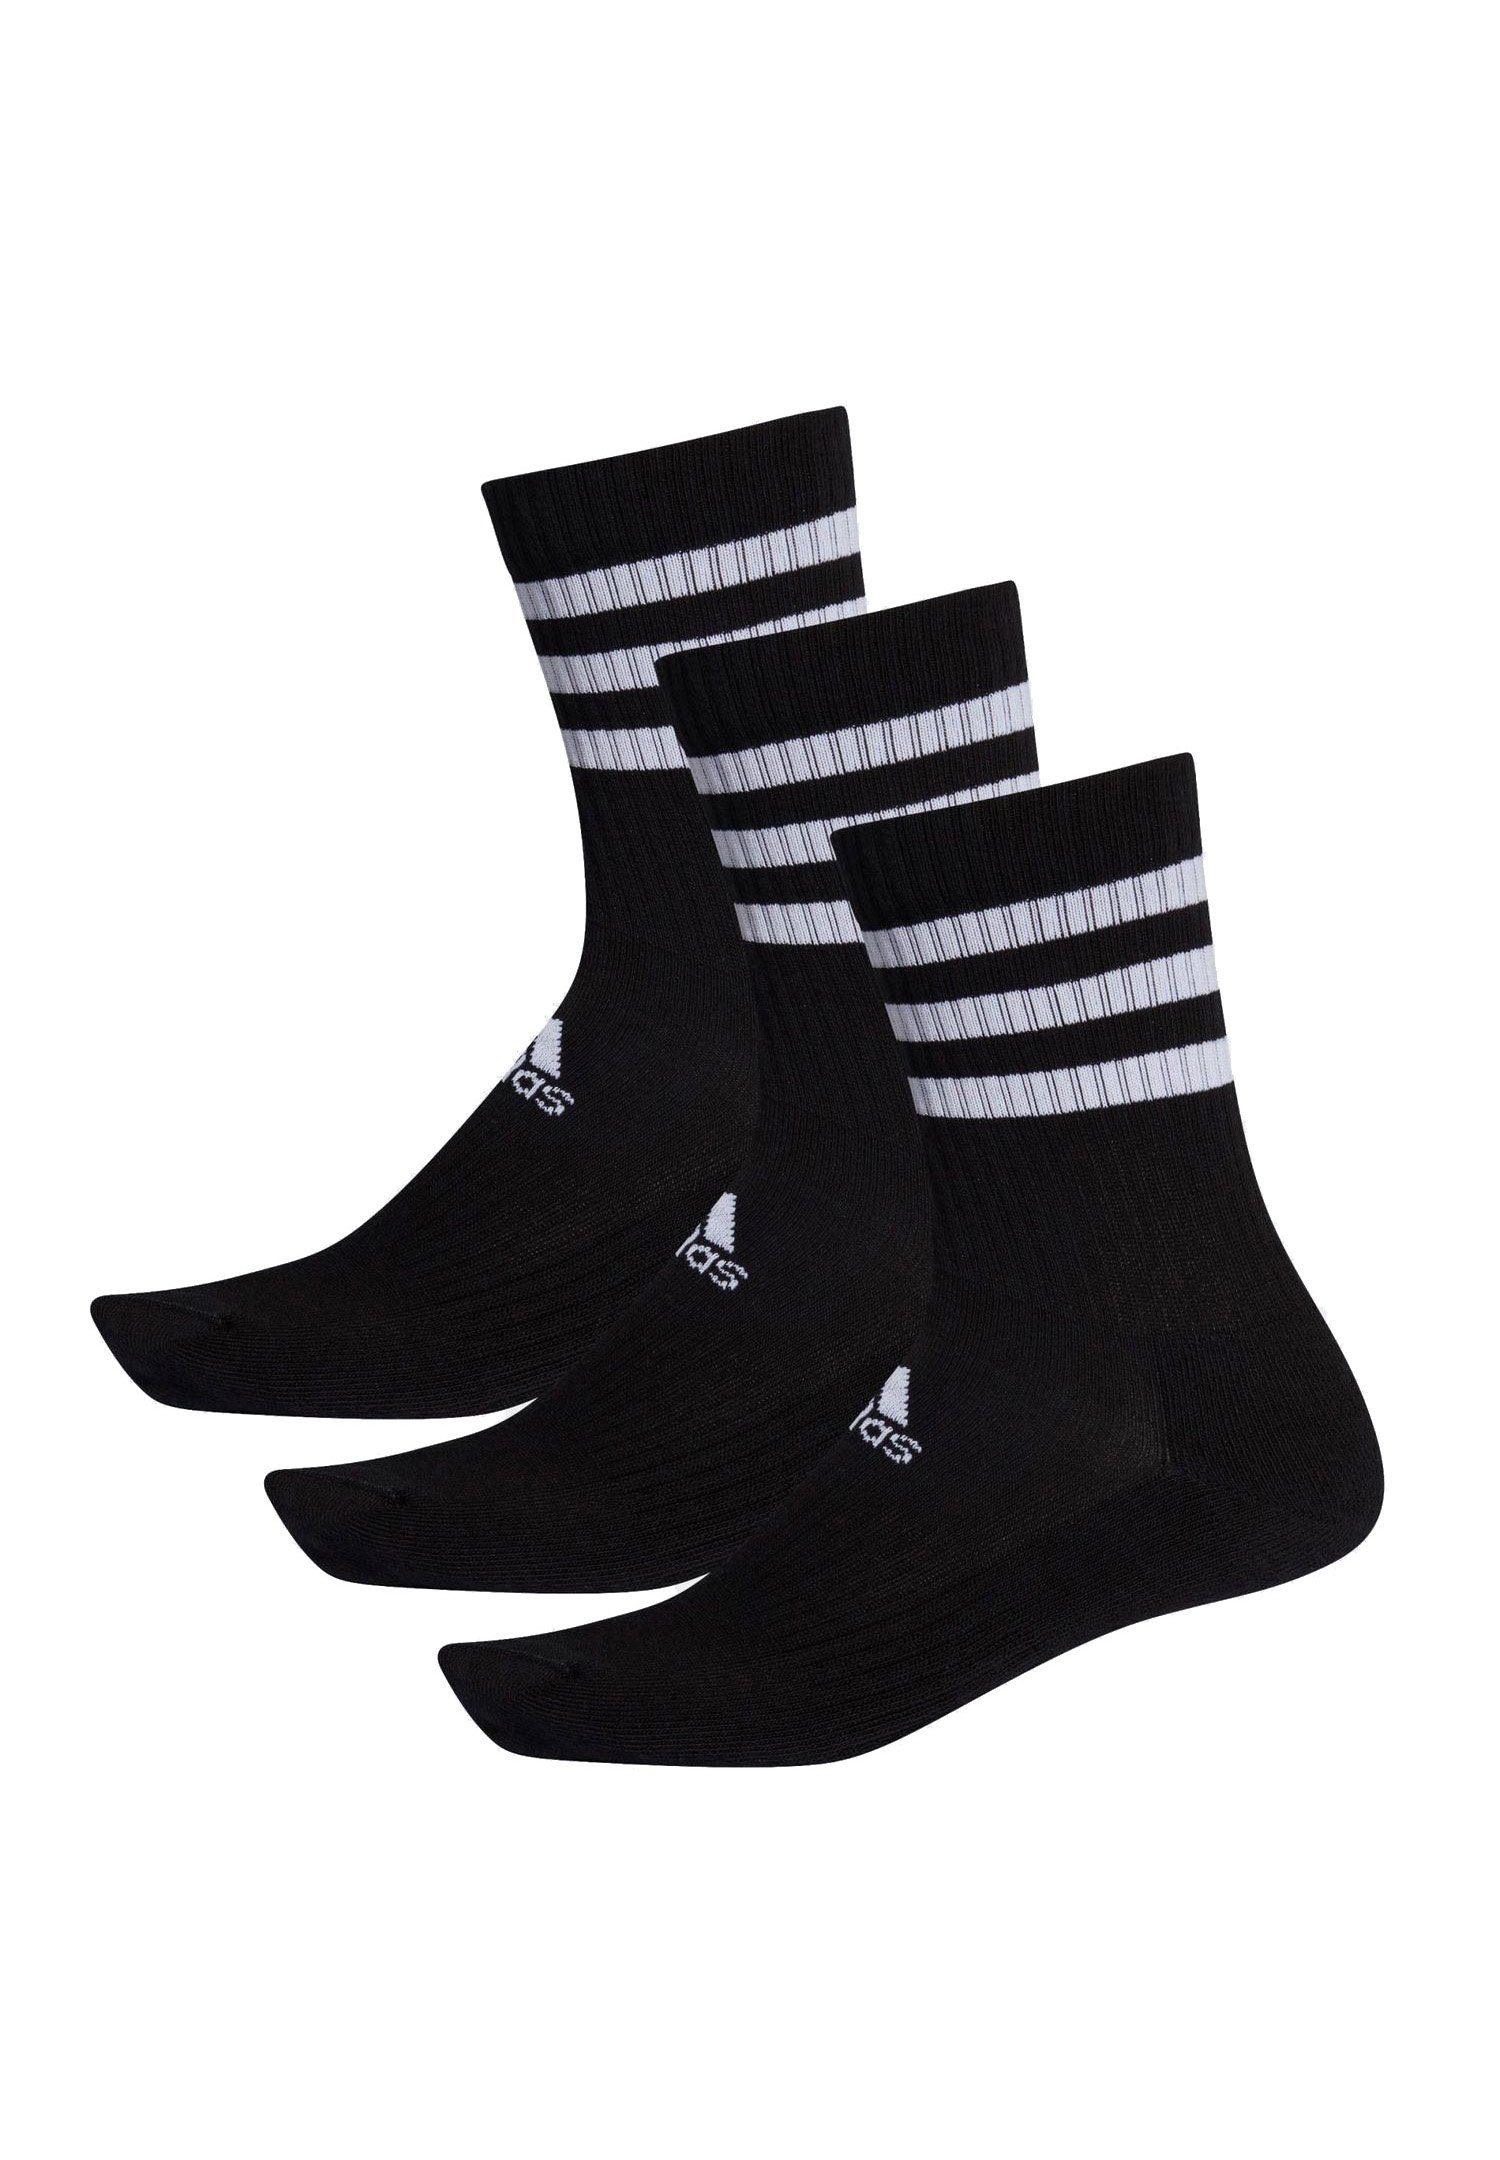 Socken Paar CRW CSH Black (3-Paar) 3 Performance 3S adidas